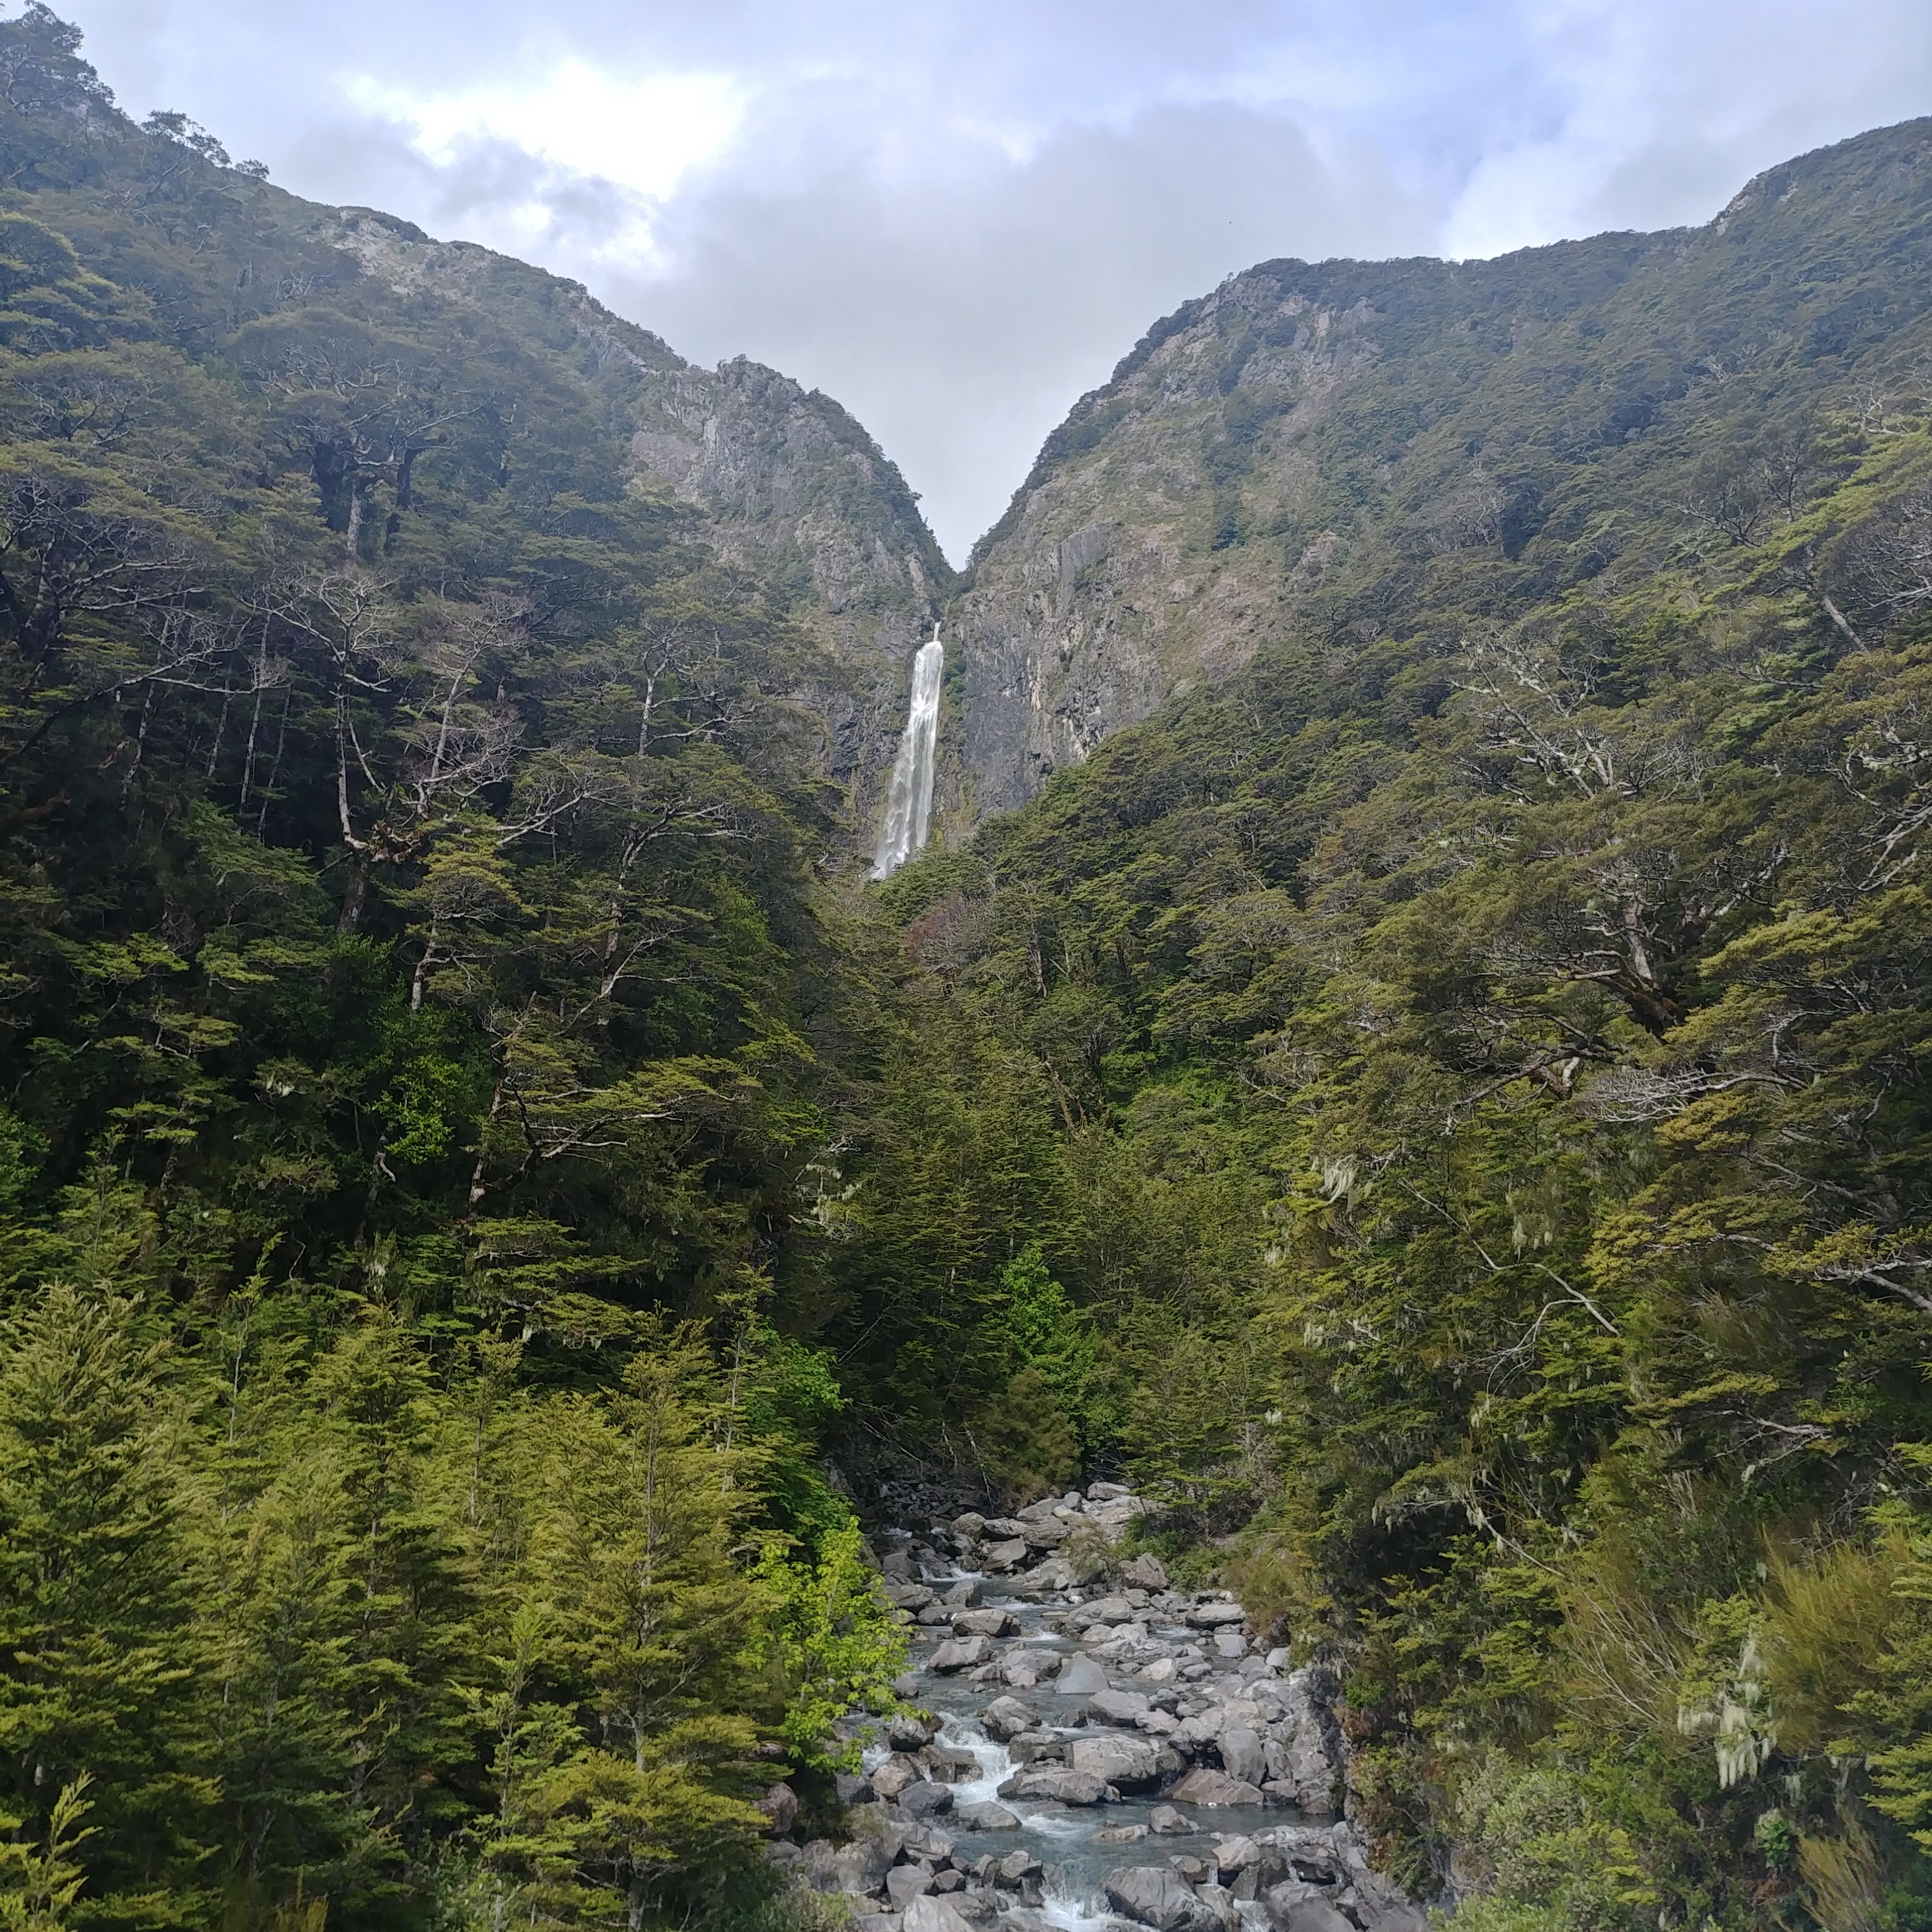 Devils Punchbowl Waterfall